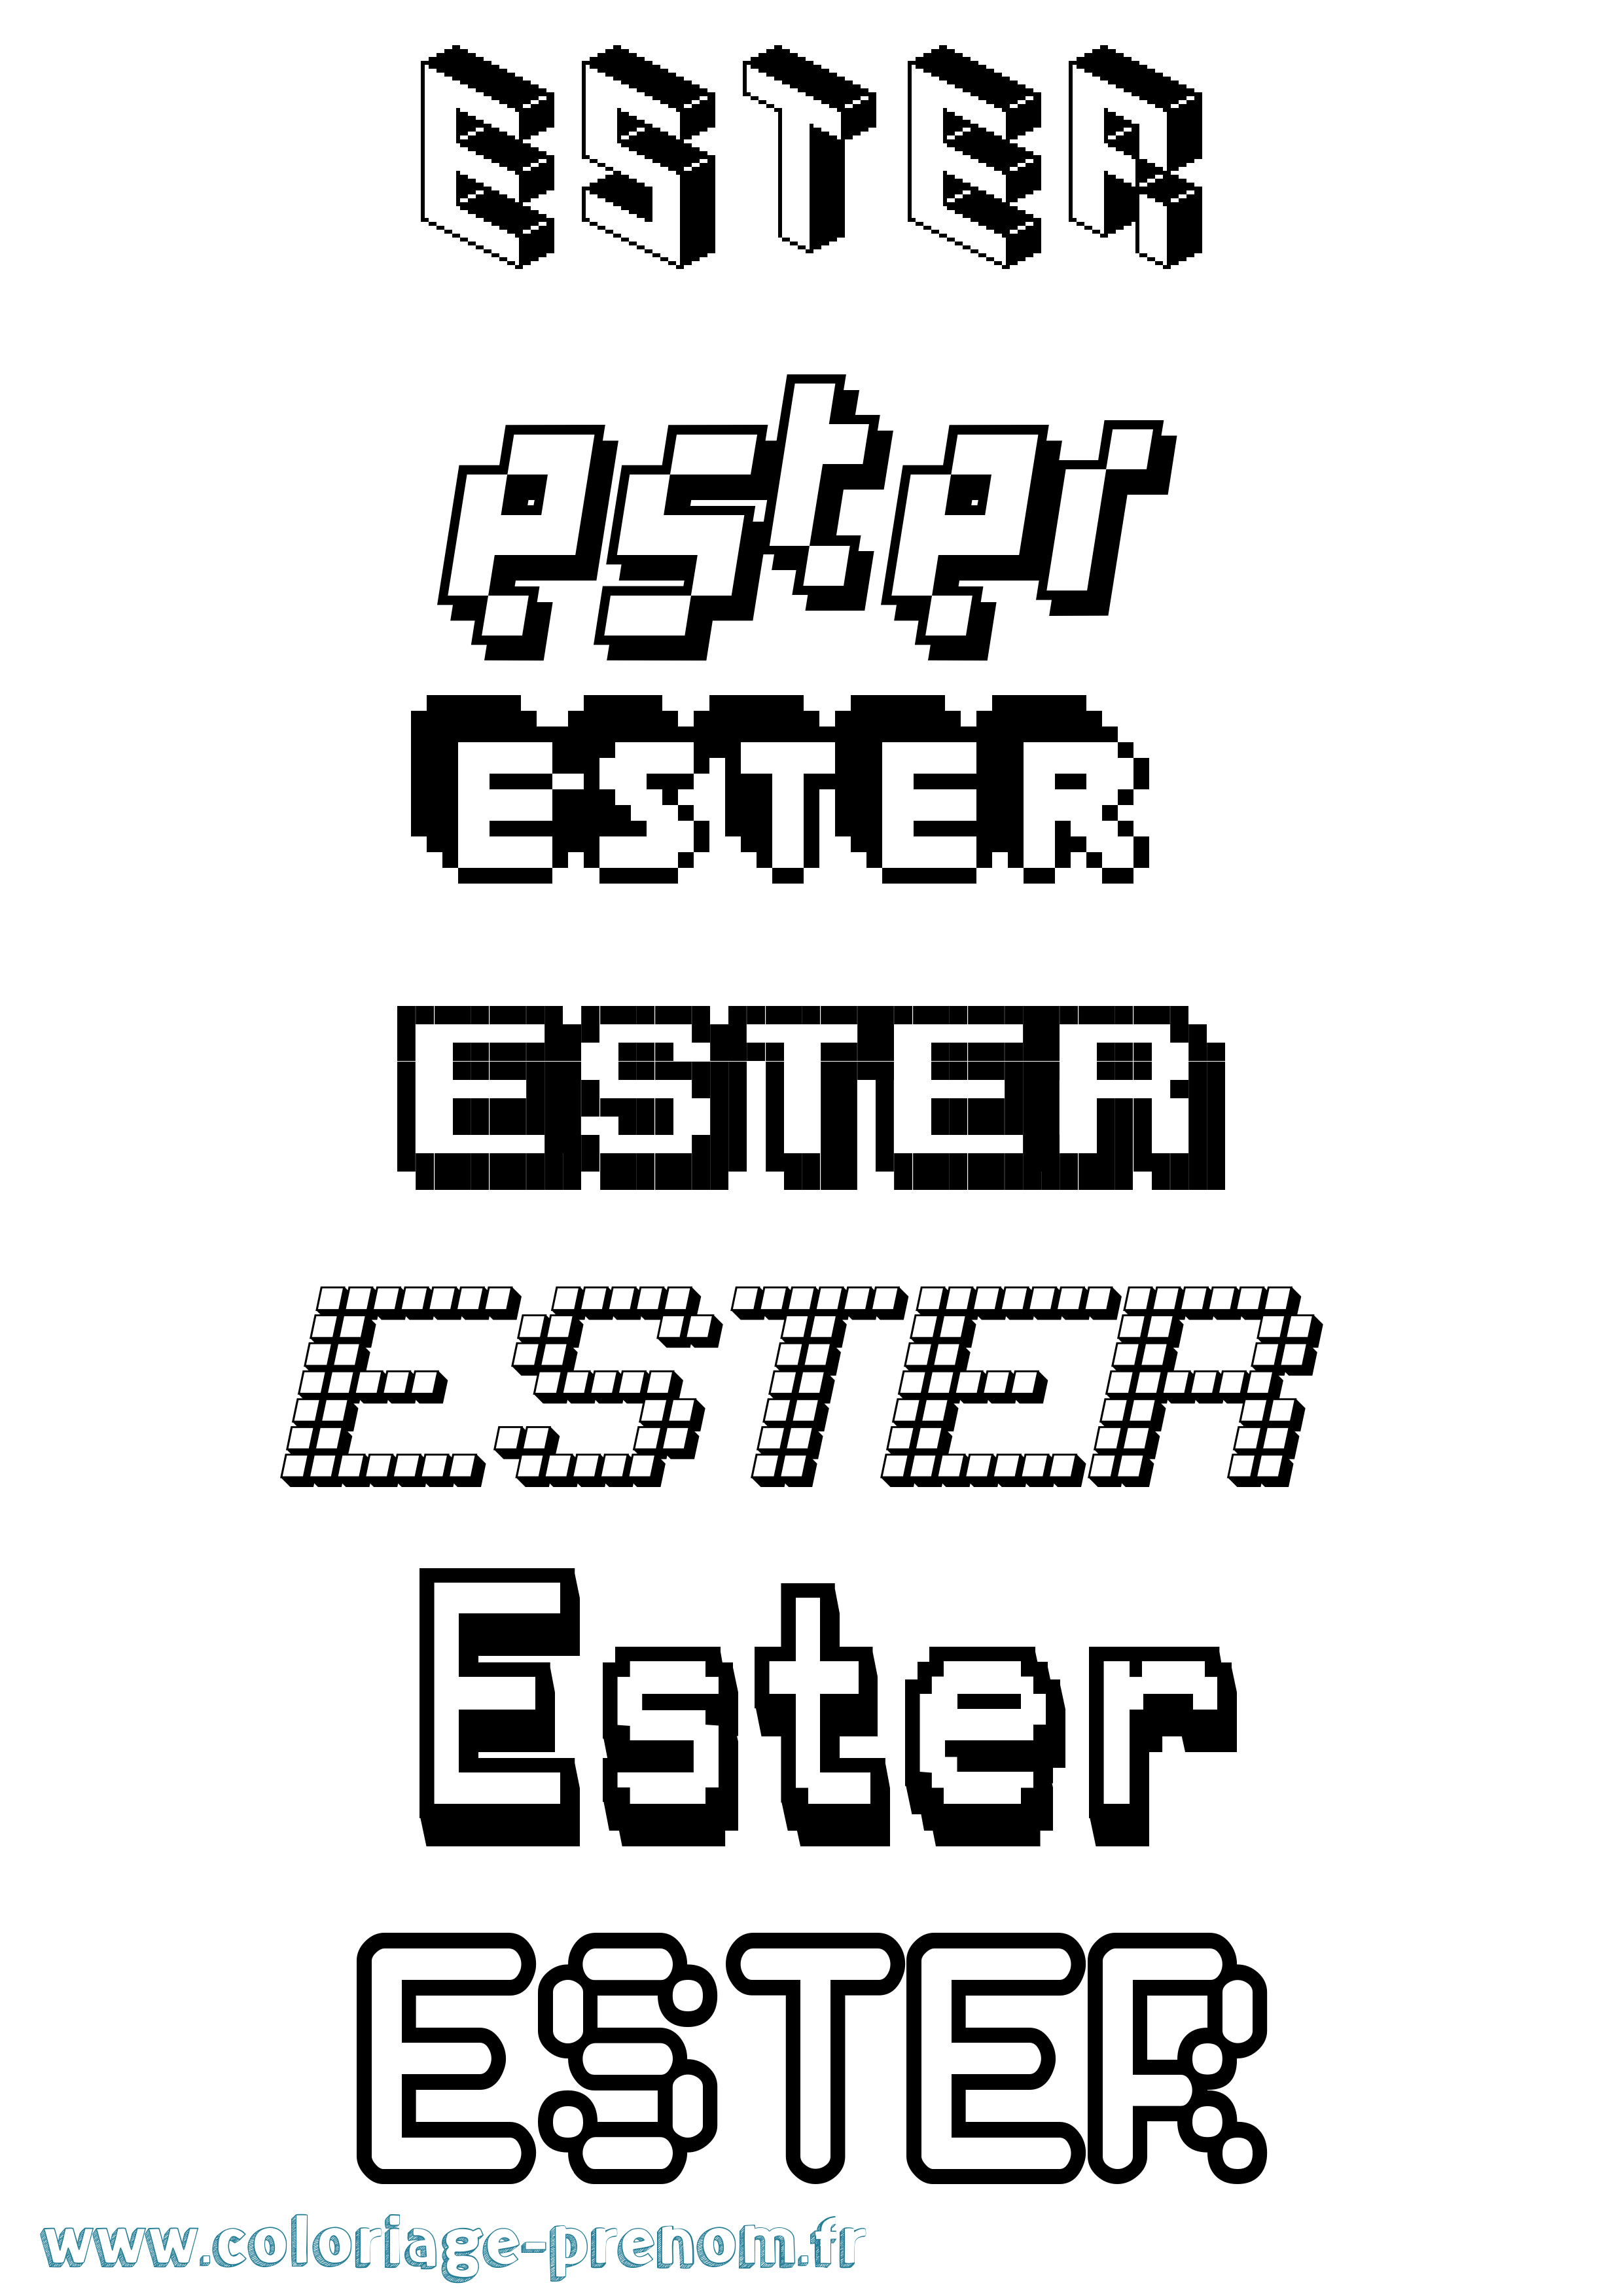 Coloriage prénom Ester Pixel